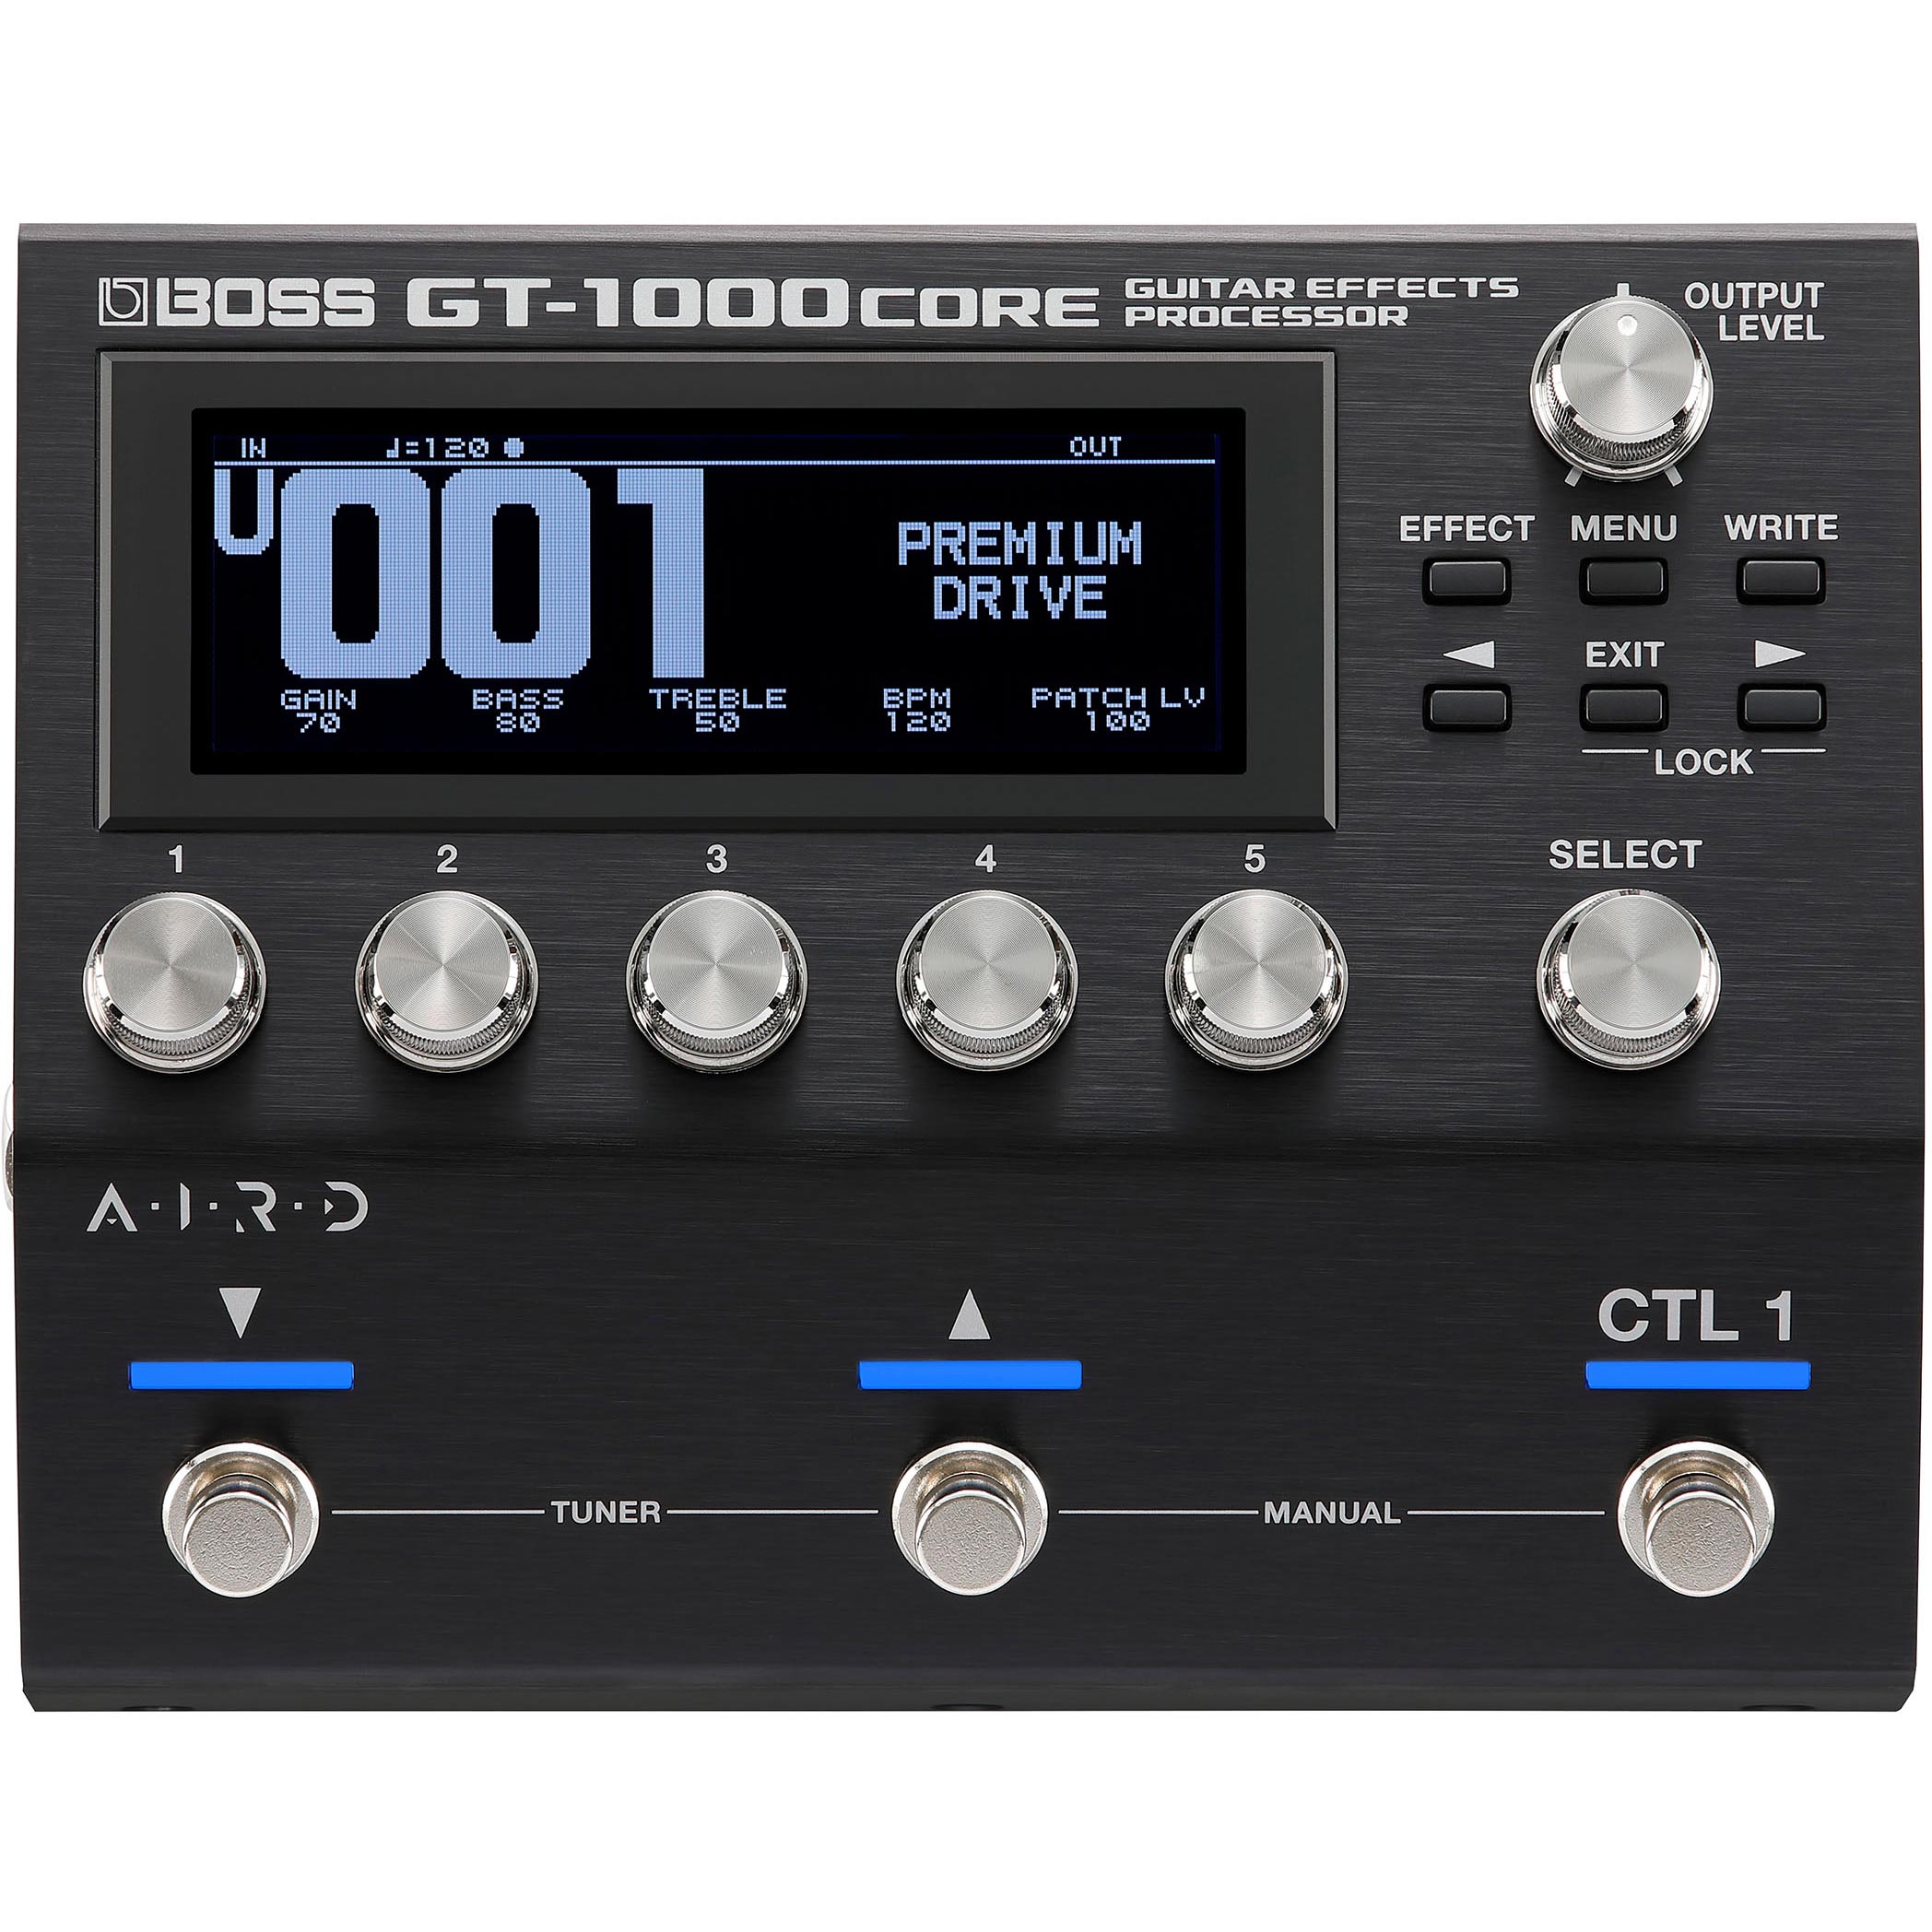 Boss GT-1000Core Guitar Effects processor, cena:810.00 Evra, EAN